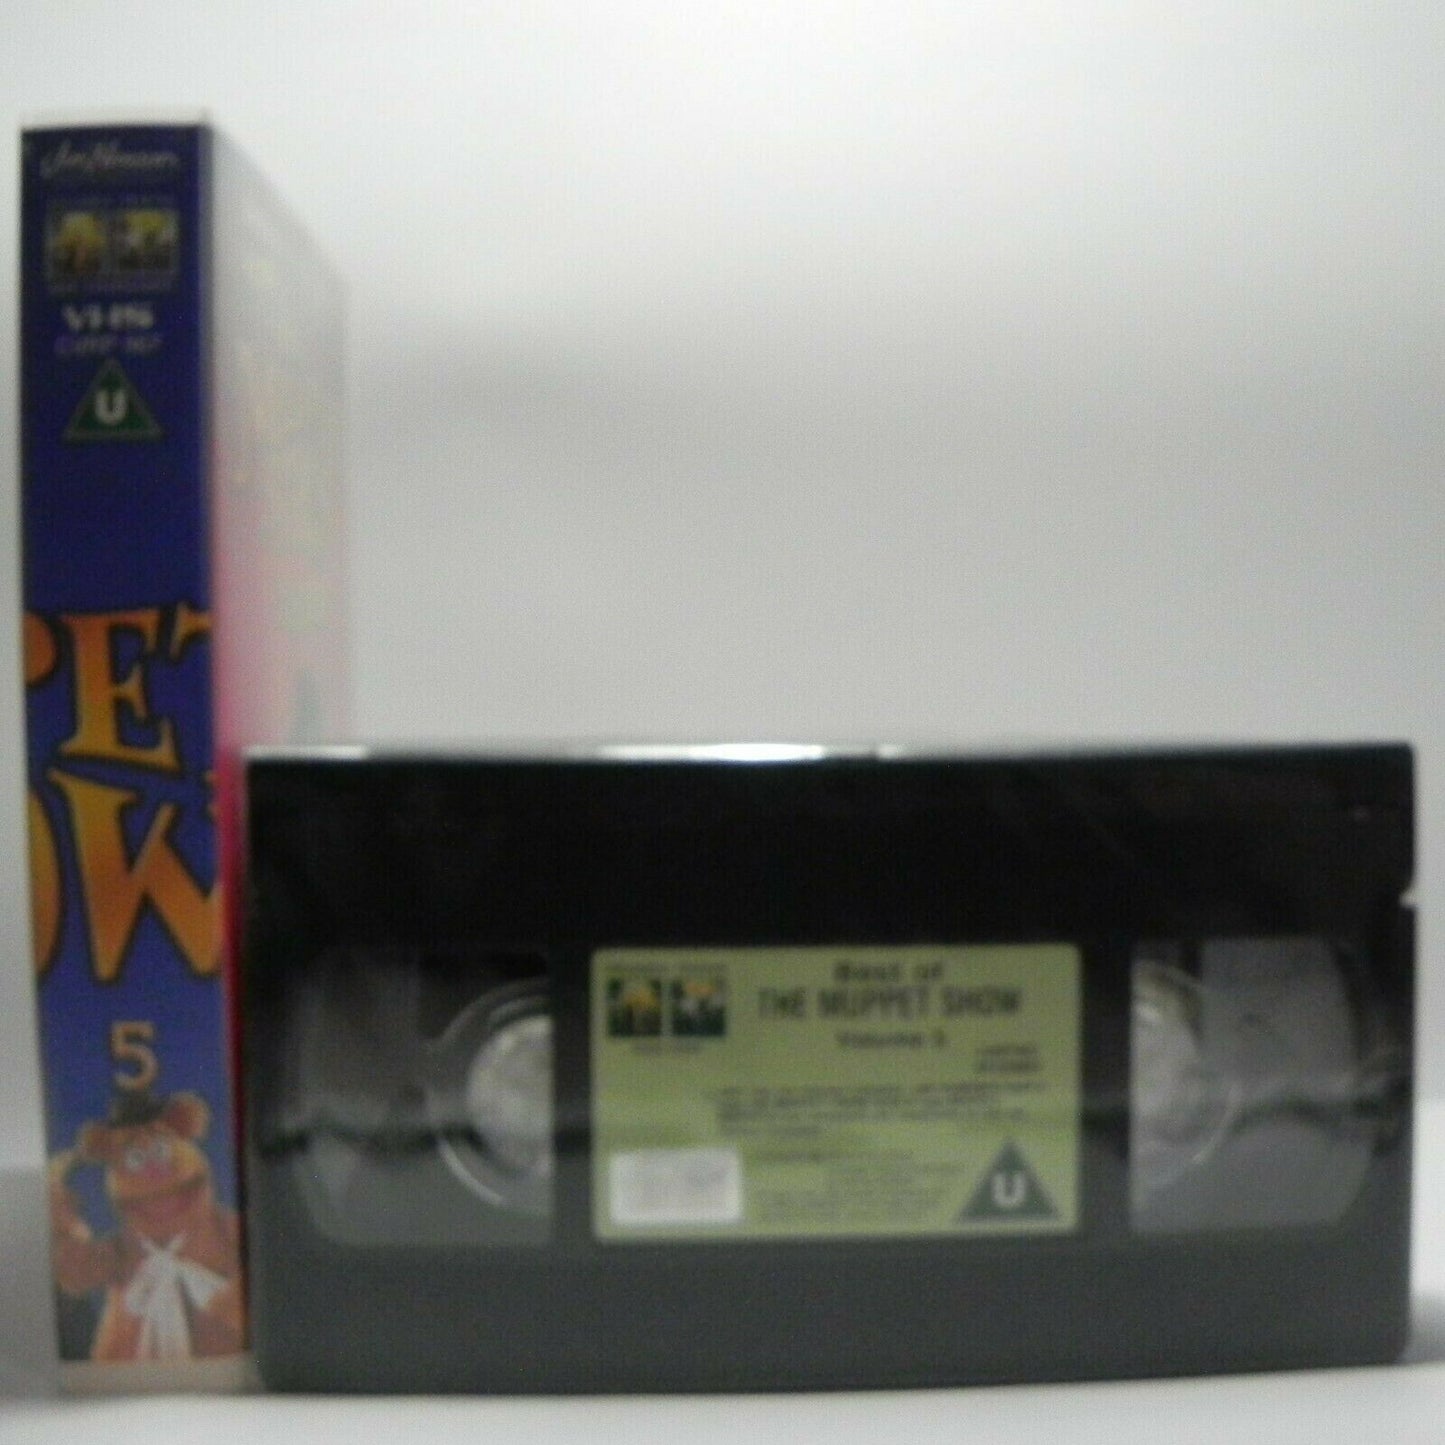 Muppet Show - Vol.5 - Best Of - Singers - Alice Cooper - Elton John - Pal VHS-